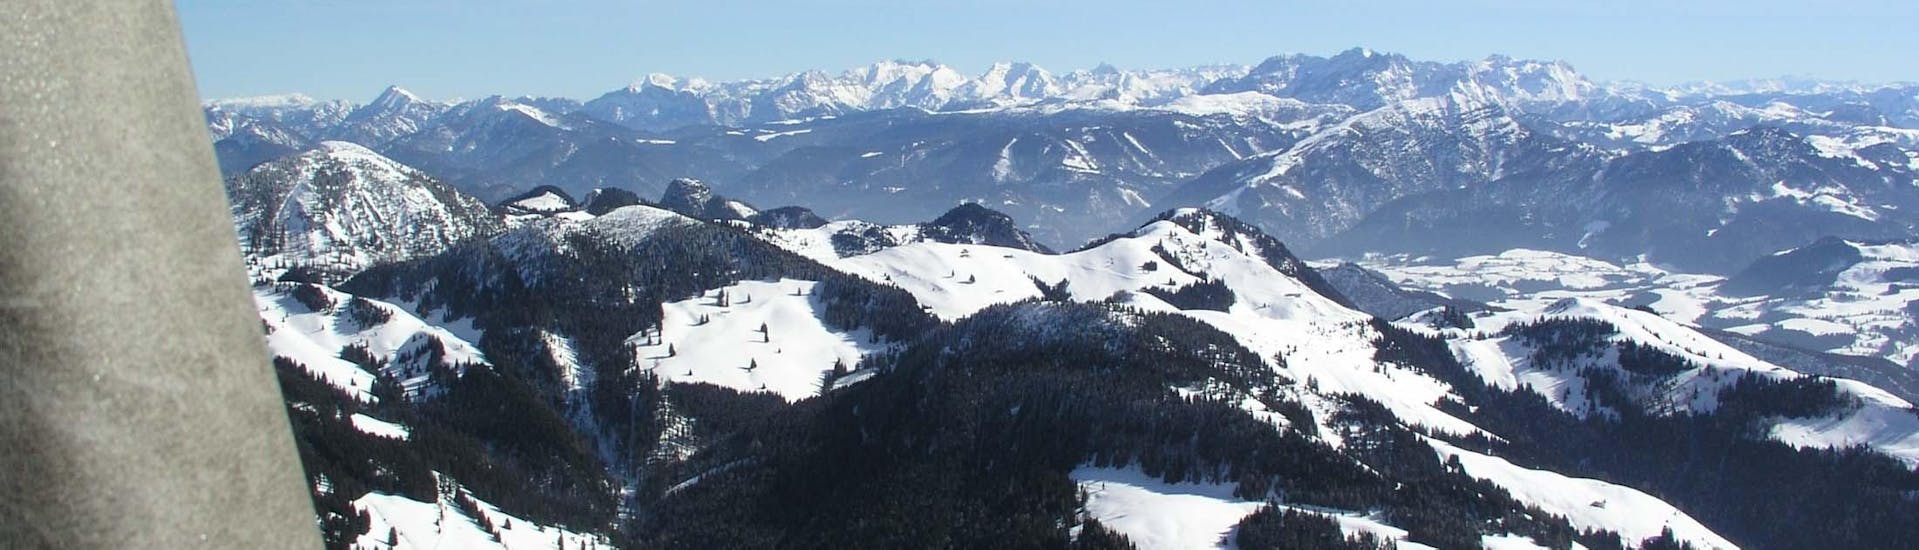 Alpine Ballonfahrt in den Chiemgauer & Tiroler Alpen.